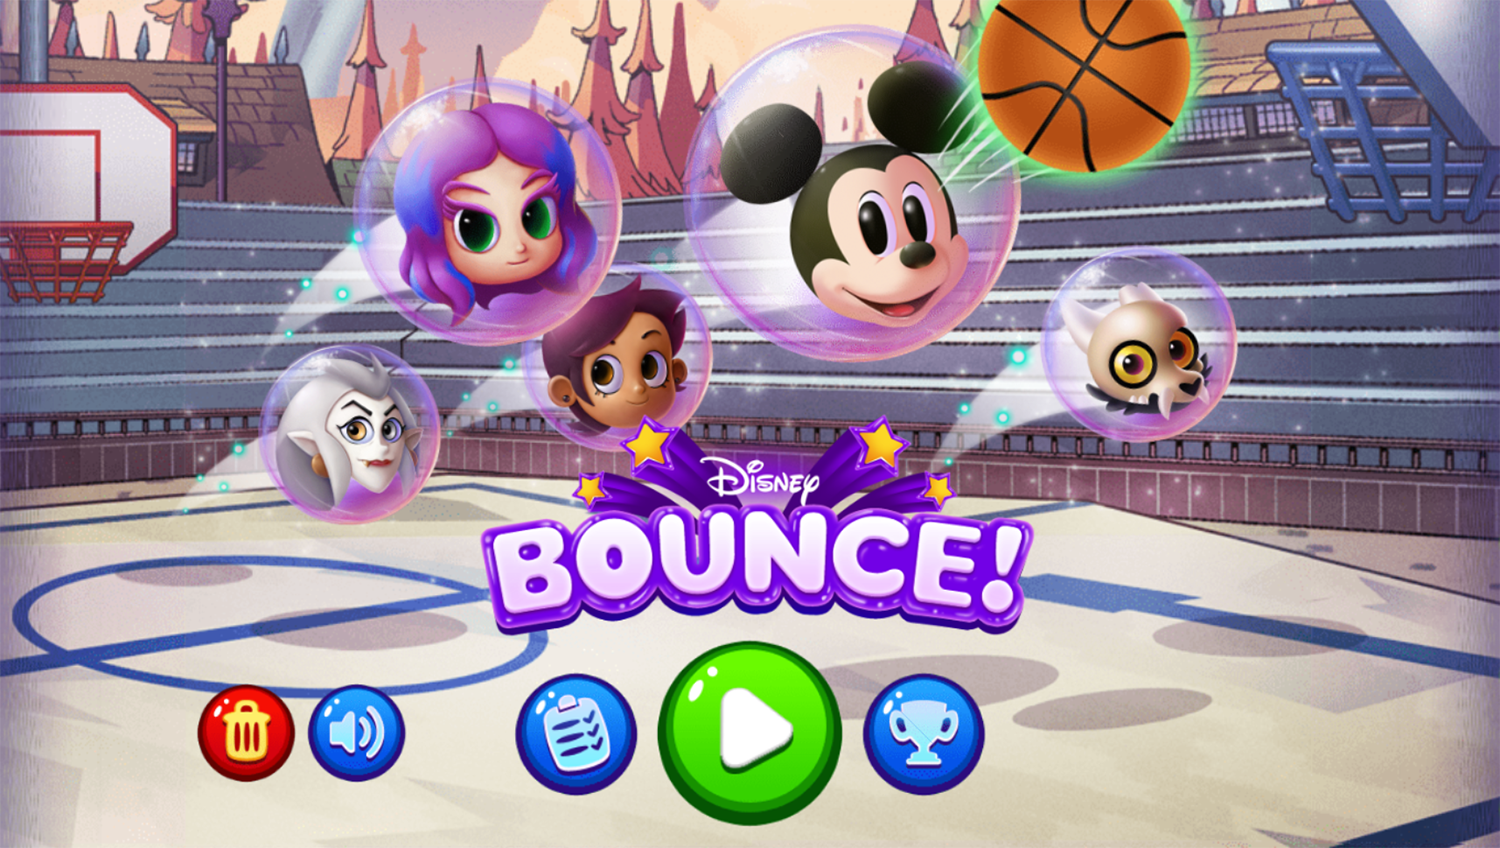 Disney Bounce Game Welcome Screen Screenshot.